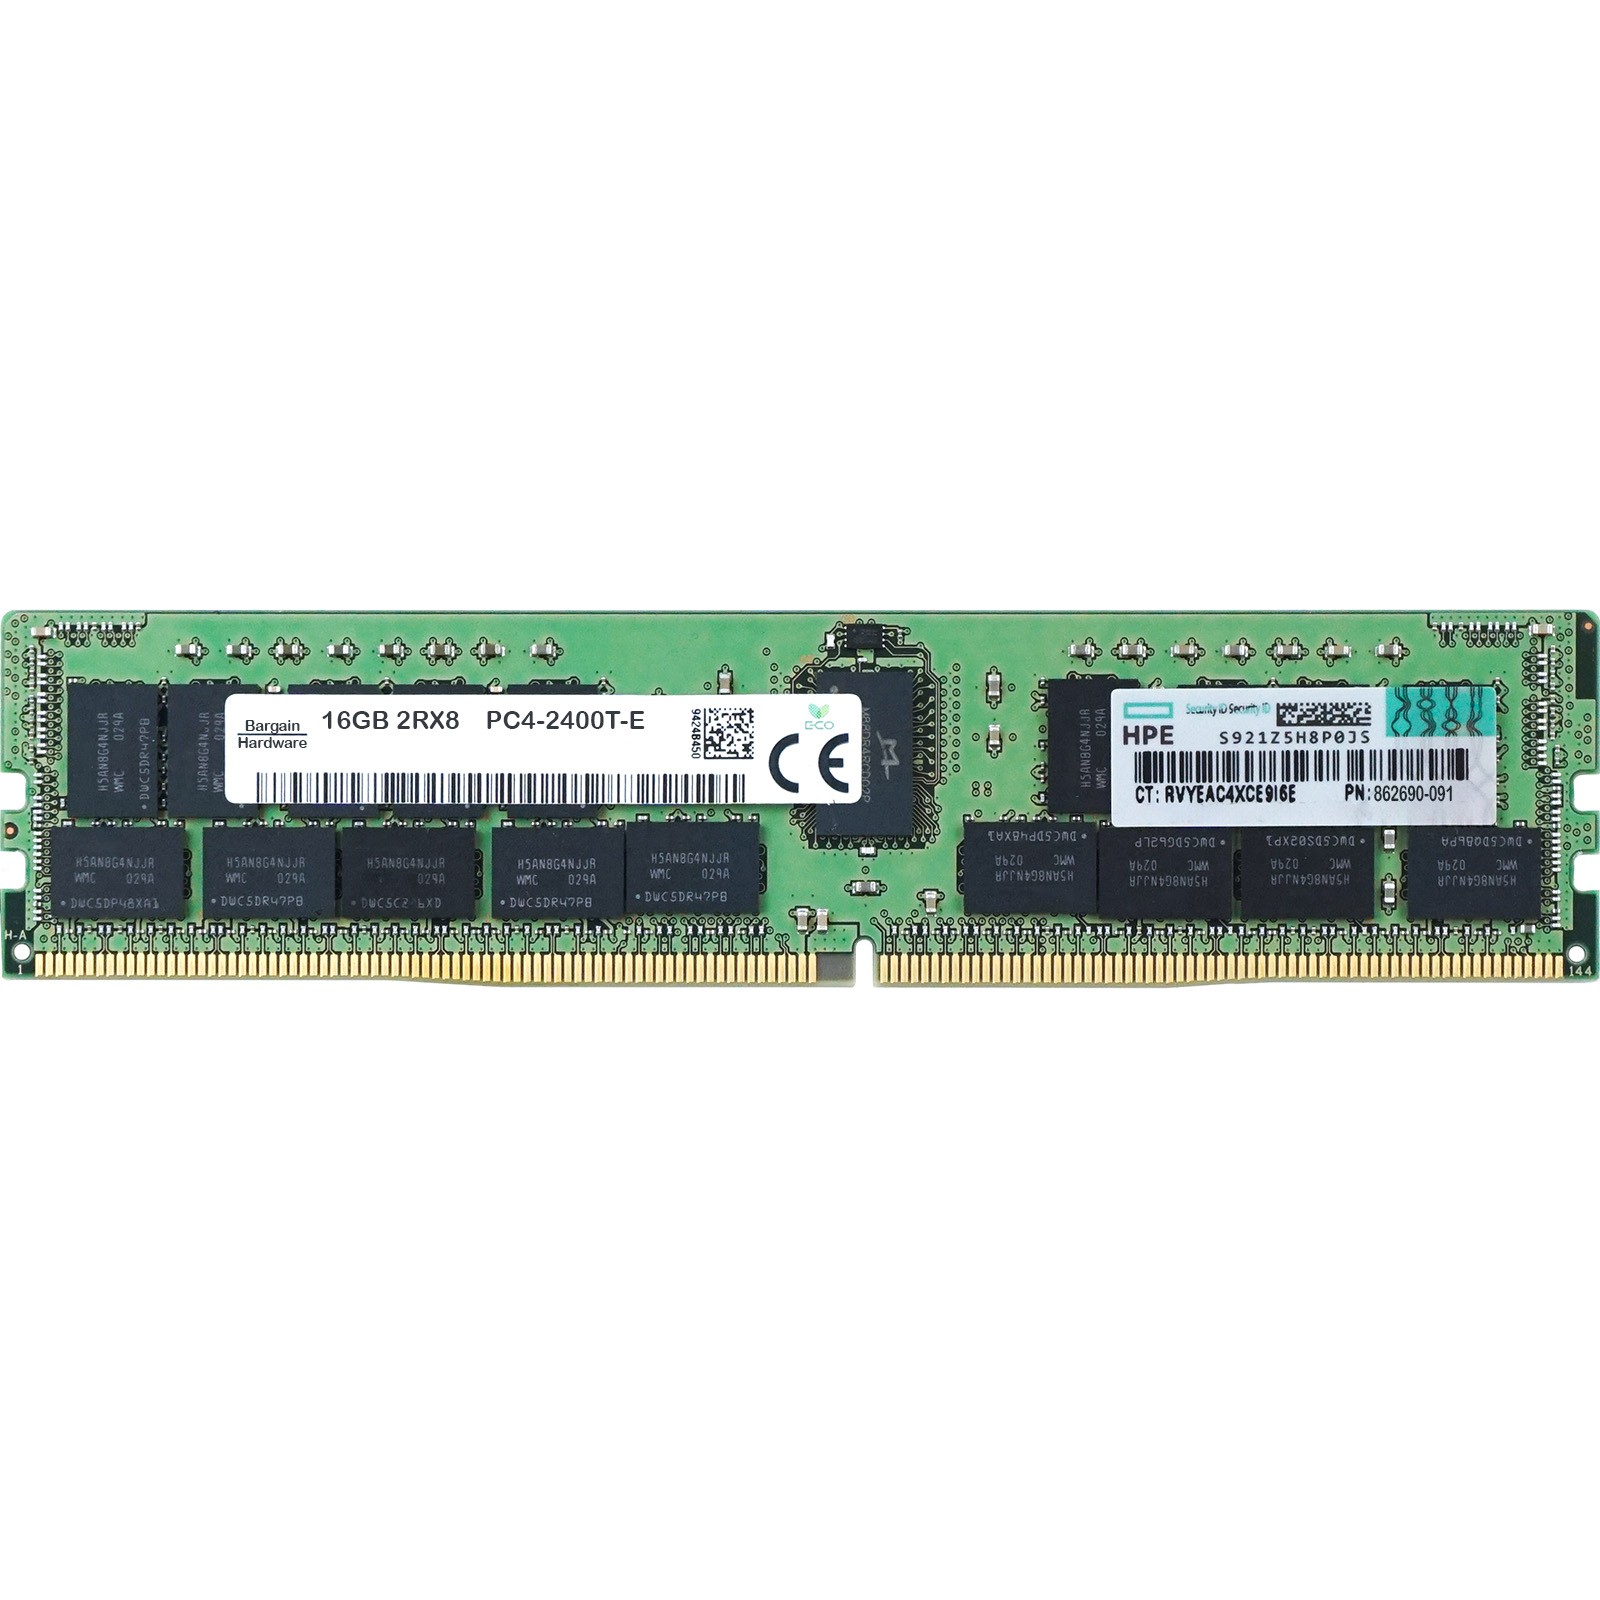 HP (862690-091) - 16GB -PC4-19200T-E (2RX8, DDR4-2400MHz) RAM